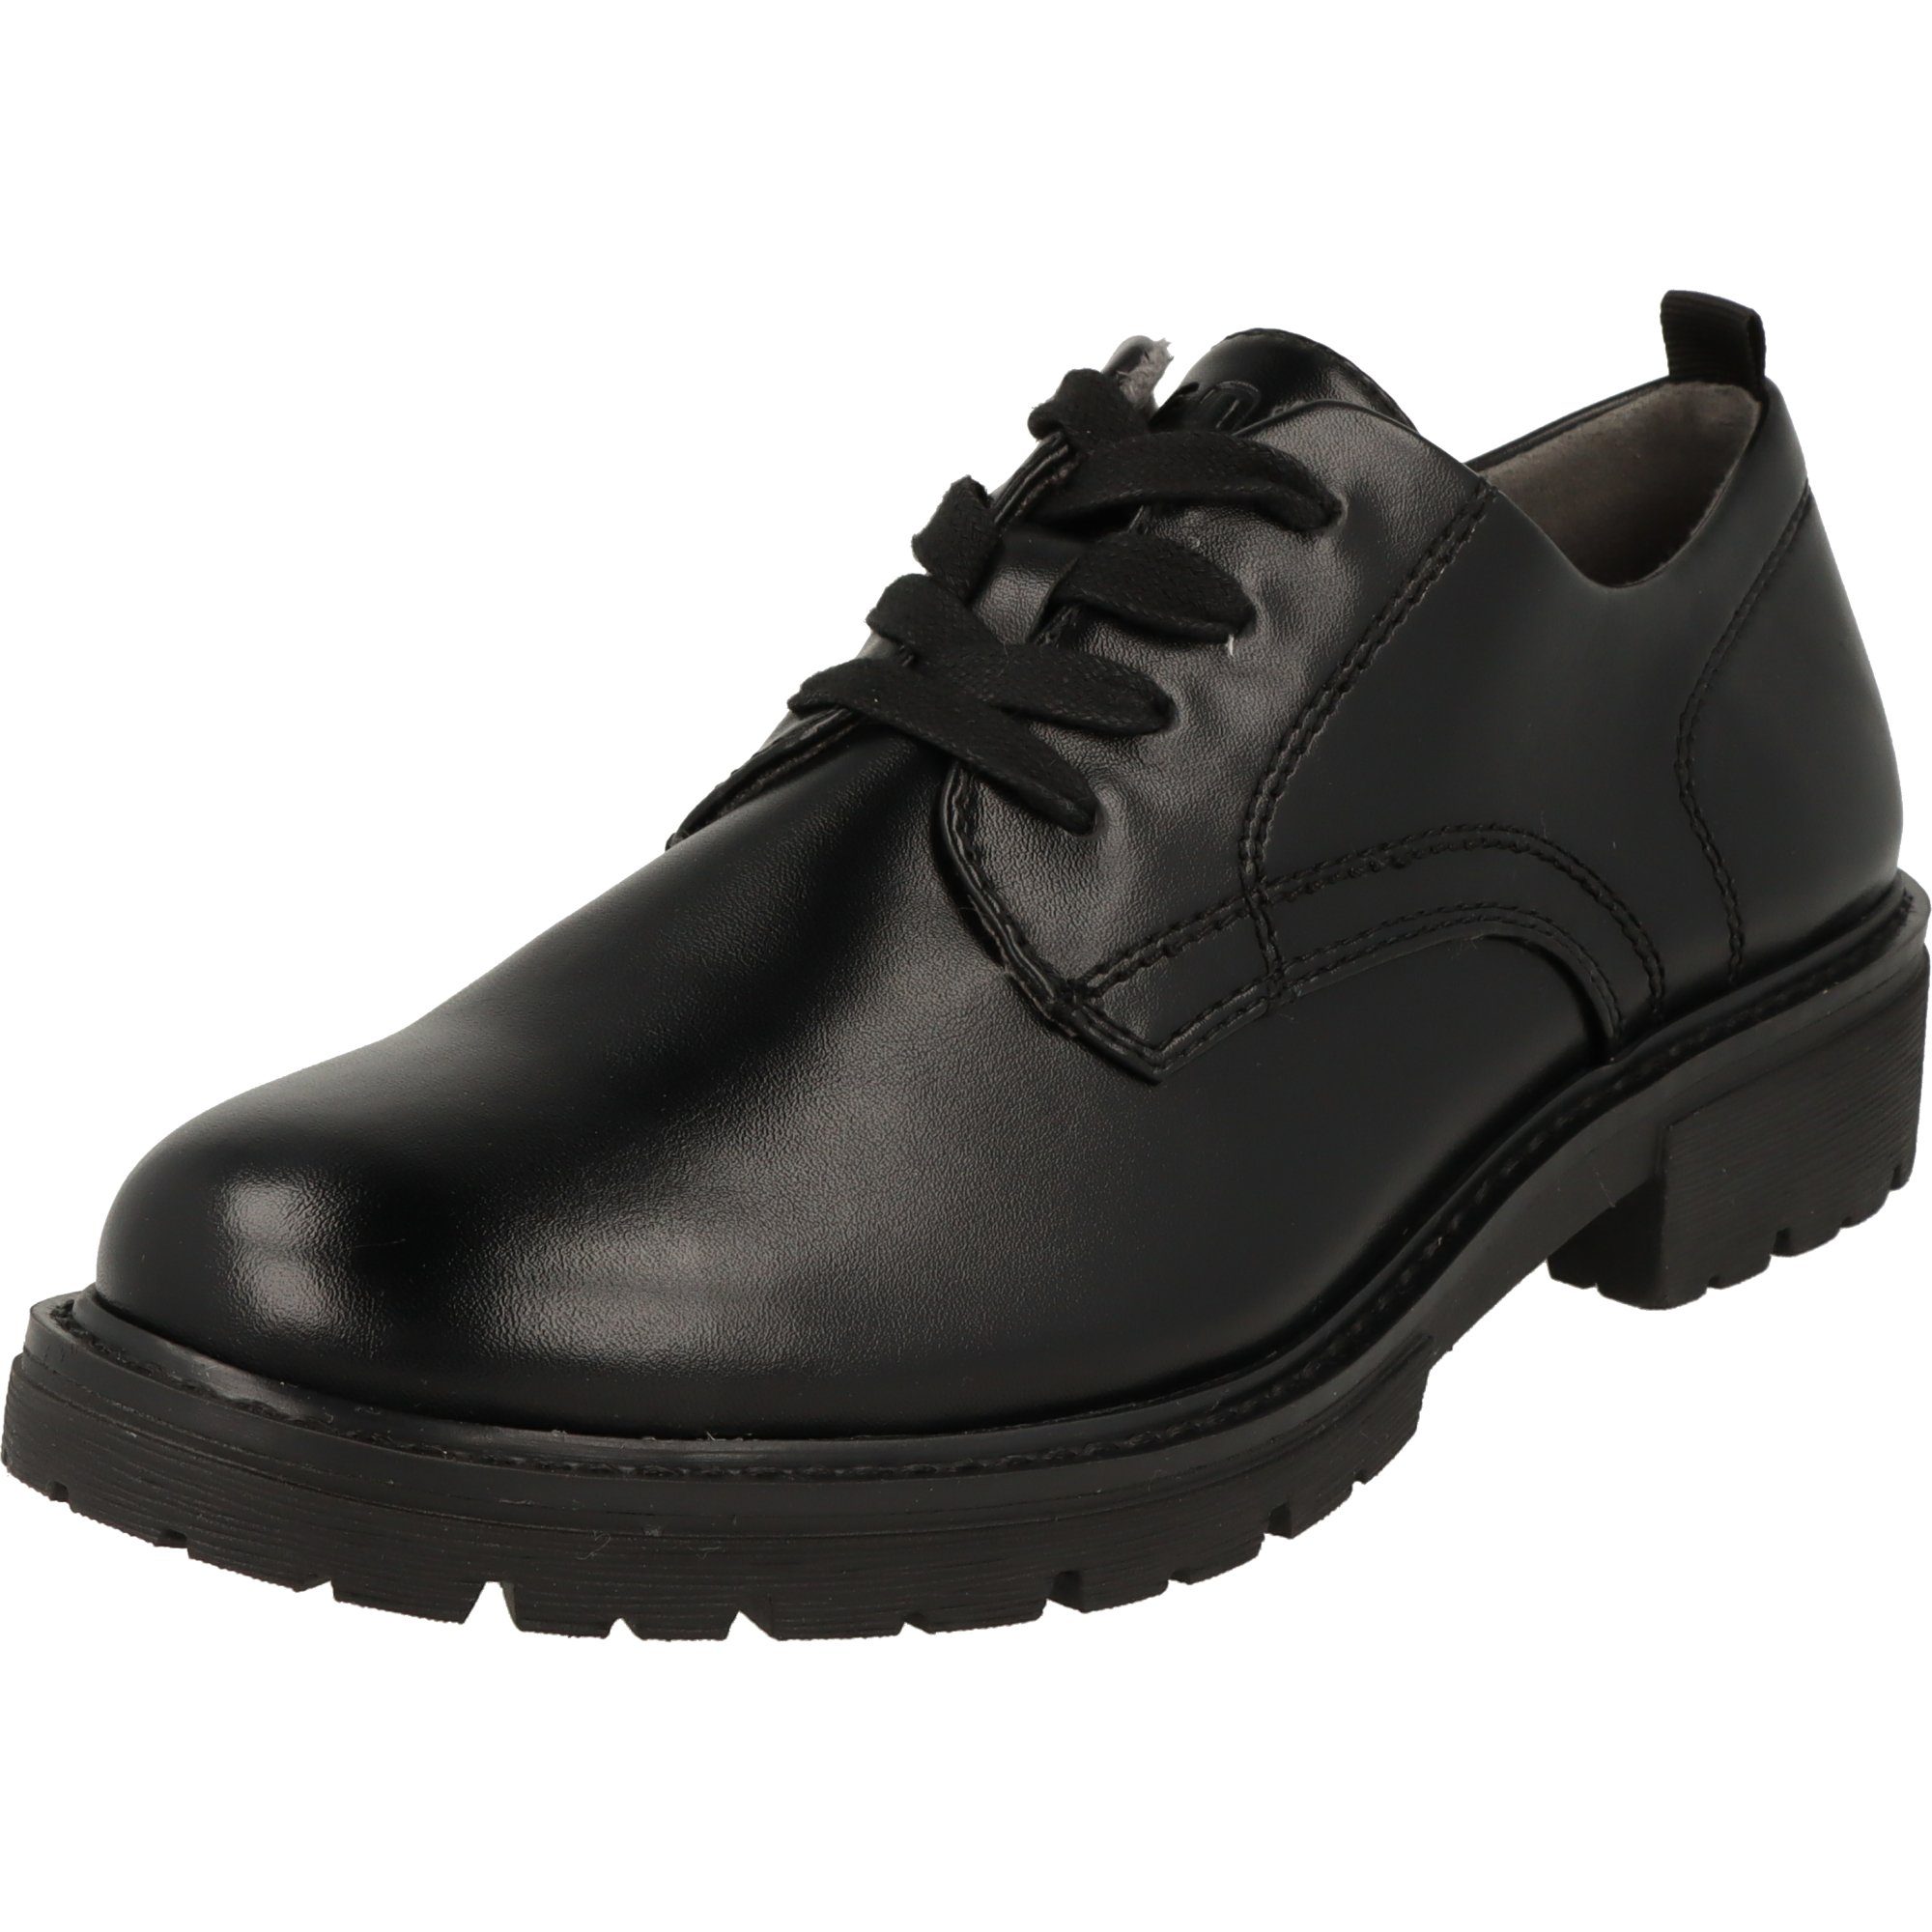 Jana Damen Schuhe Komfort Halbschuhe H-Weite 8-23773-41 Schnürschuh Recycled PET black (10101347) | Schnürschuhe